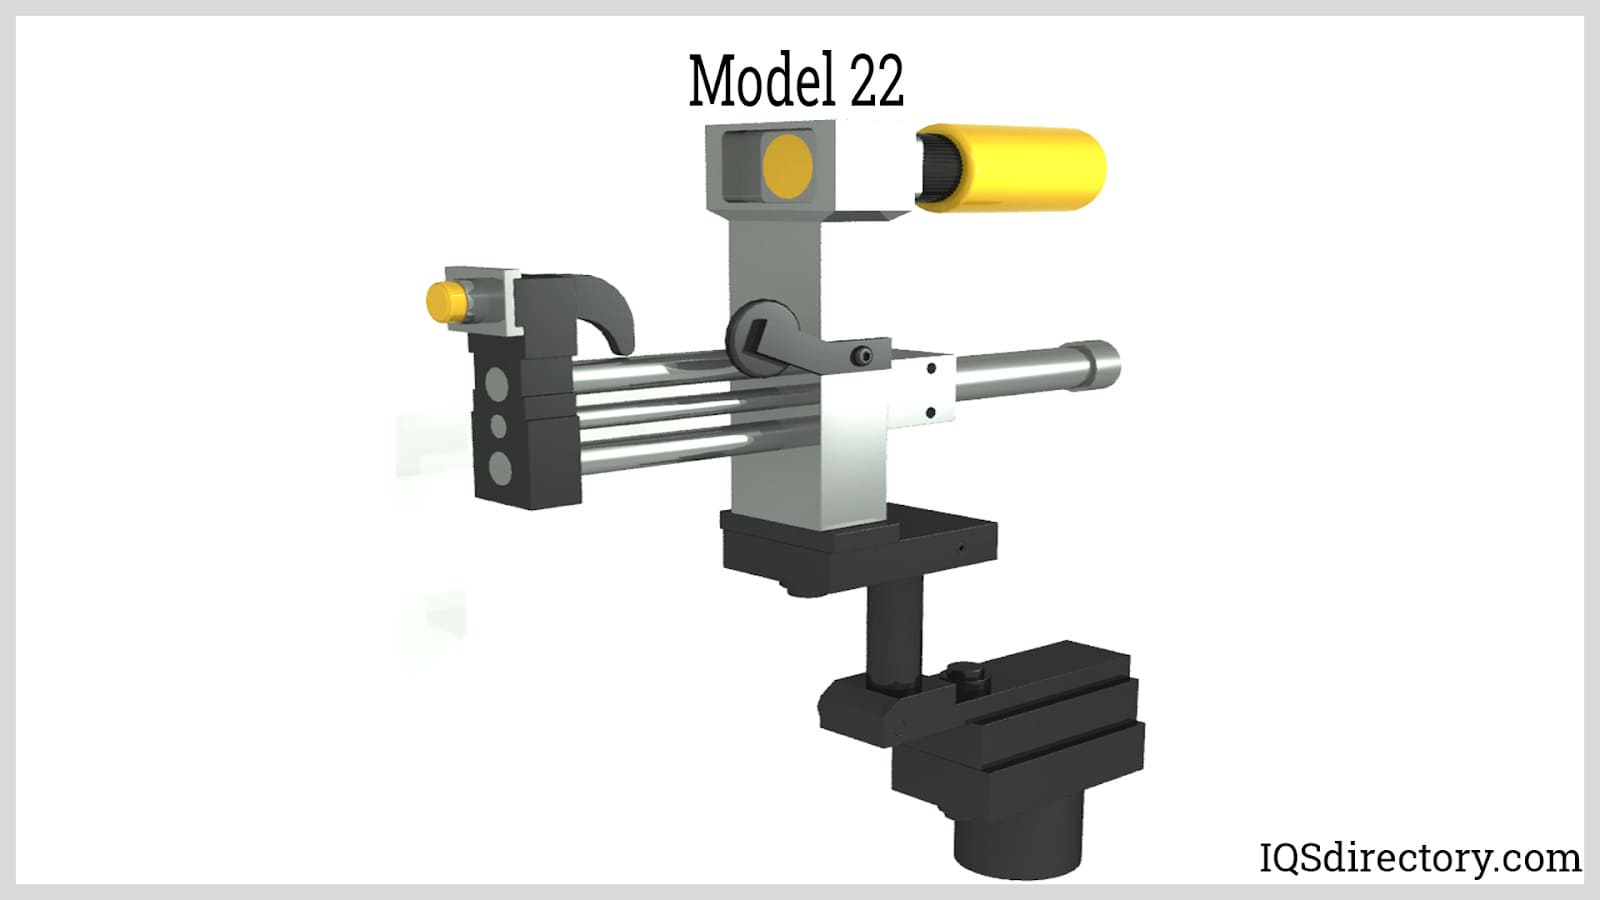 Model 22